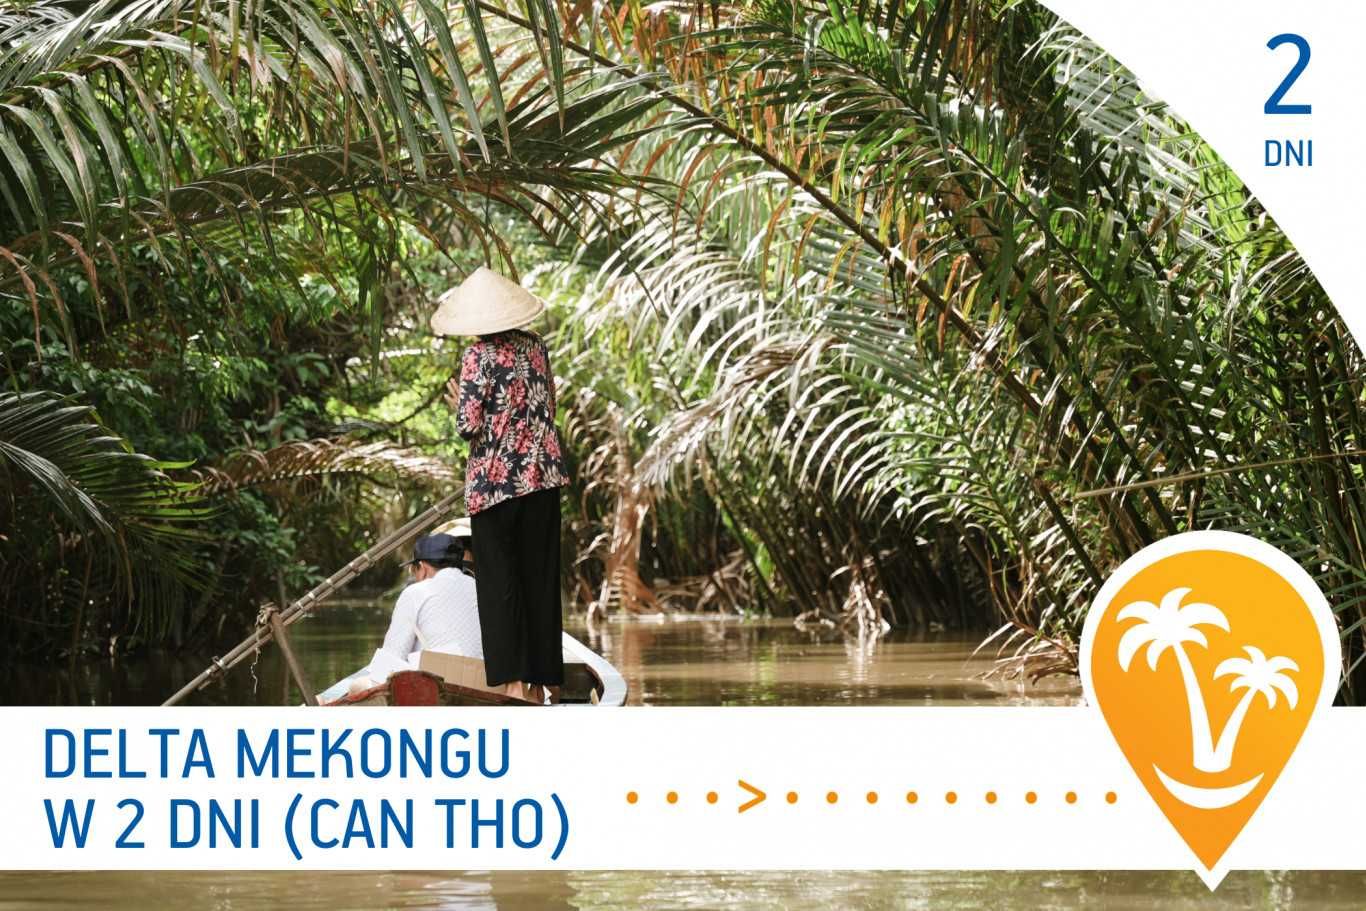 Delta Mekongu w 2 dni